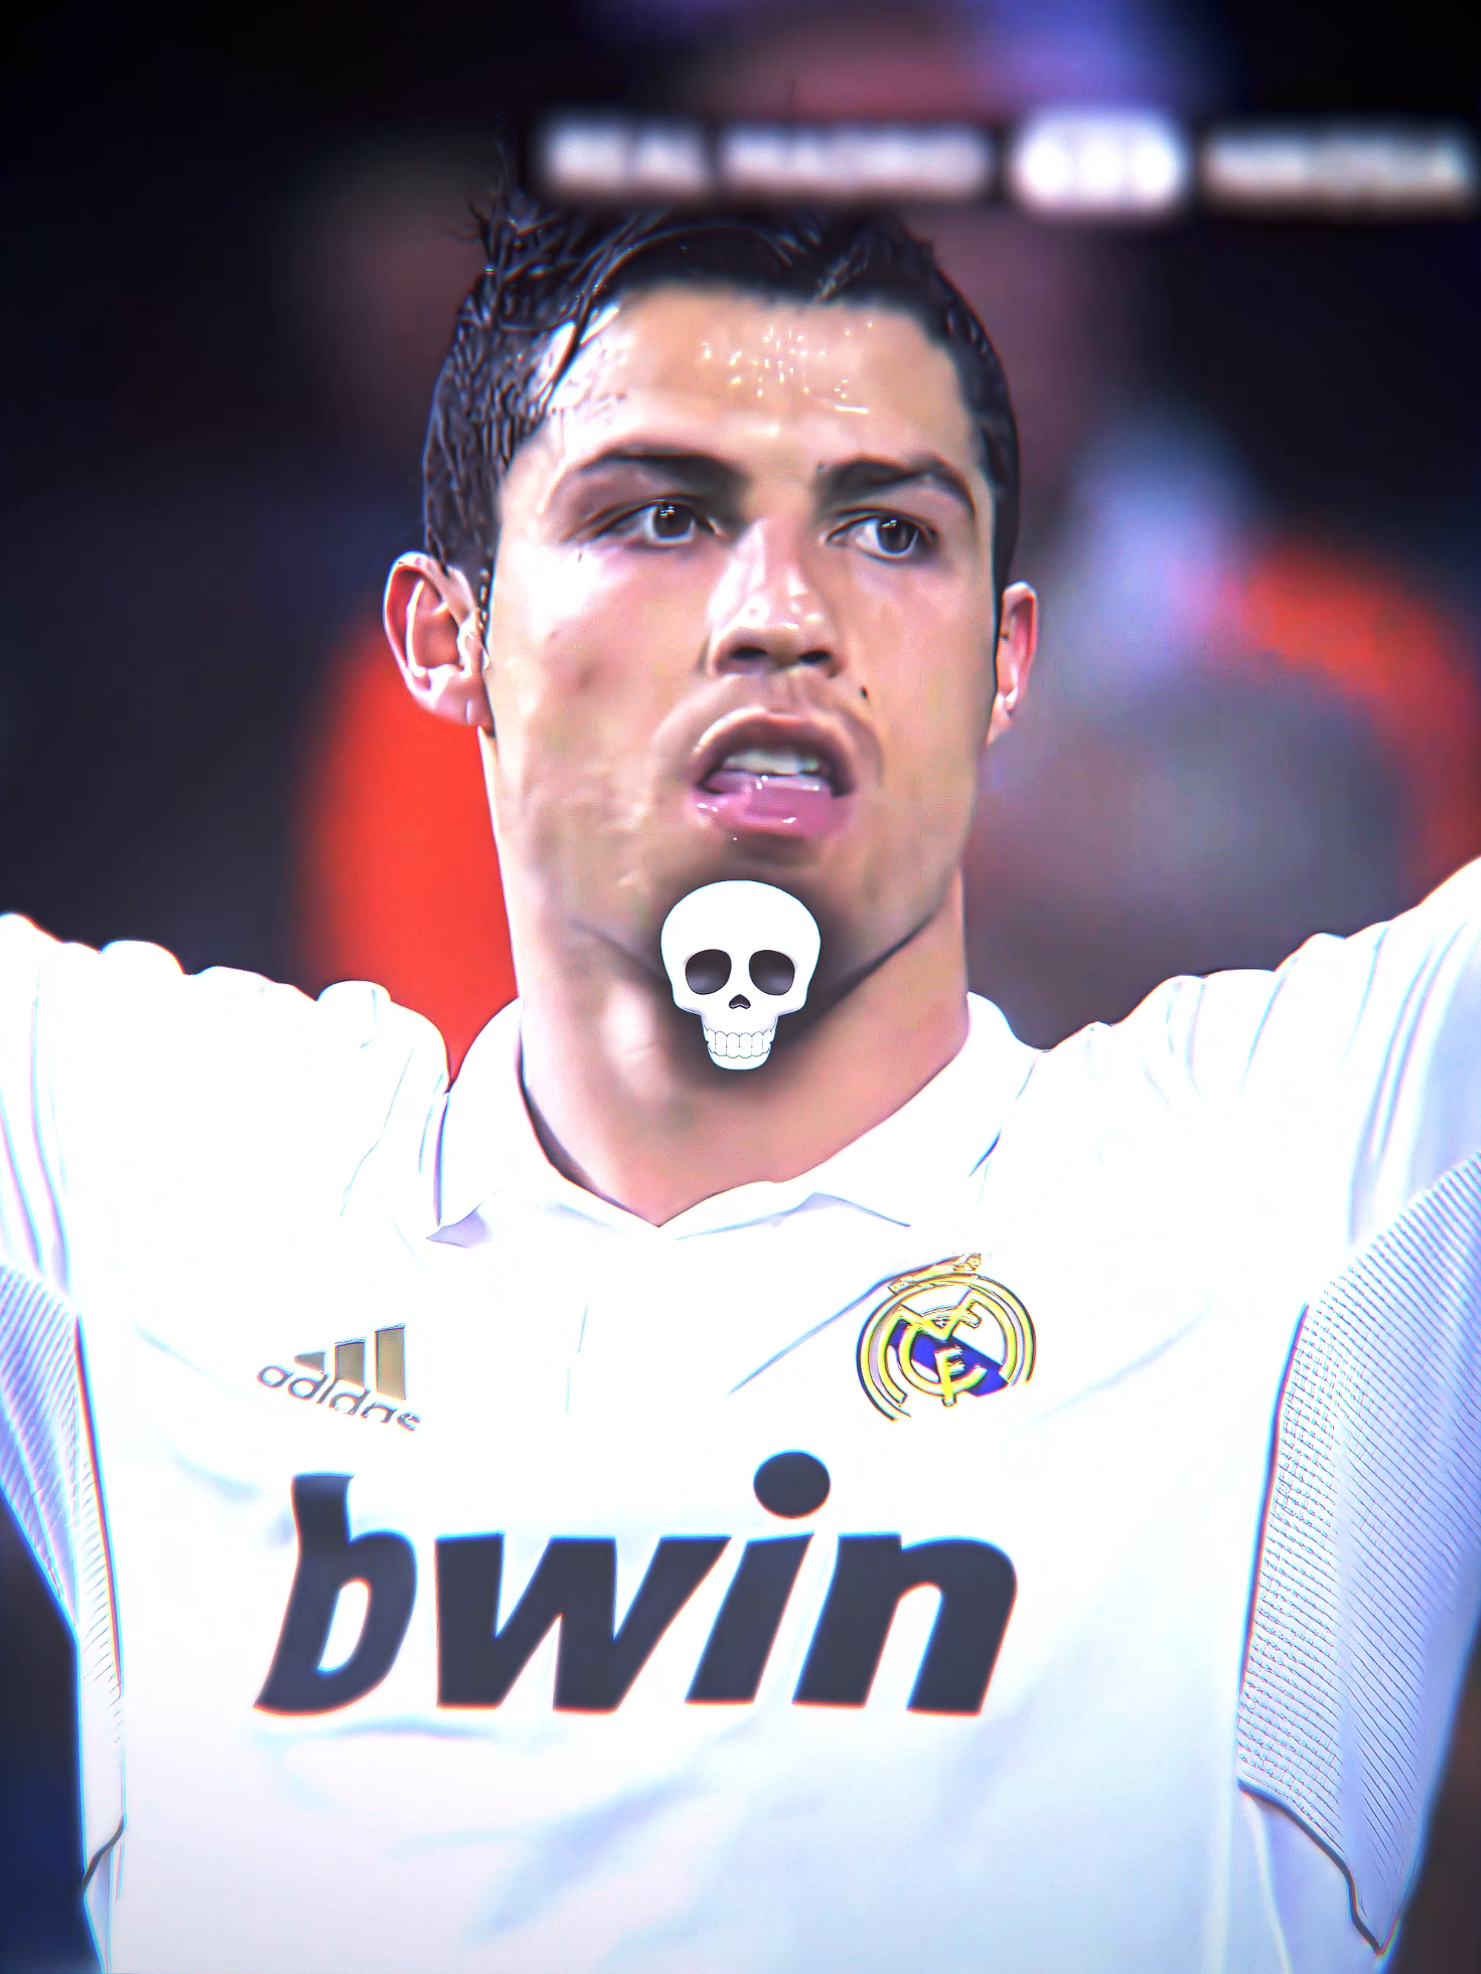 Ronaldo Aura 🥶🔥 #benzemaftbl #ronaldo #cristianoronaldo #realmadrid #football #ucl #championsleague #edit